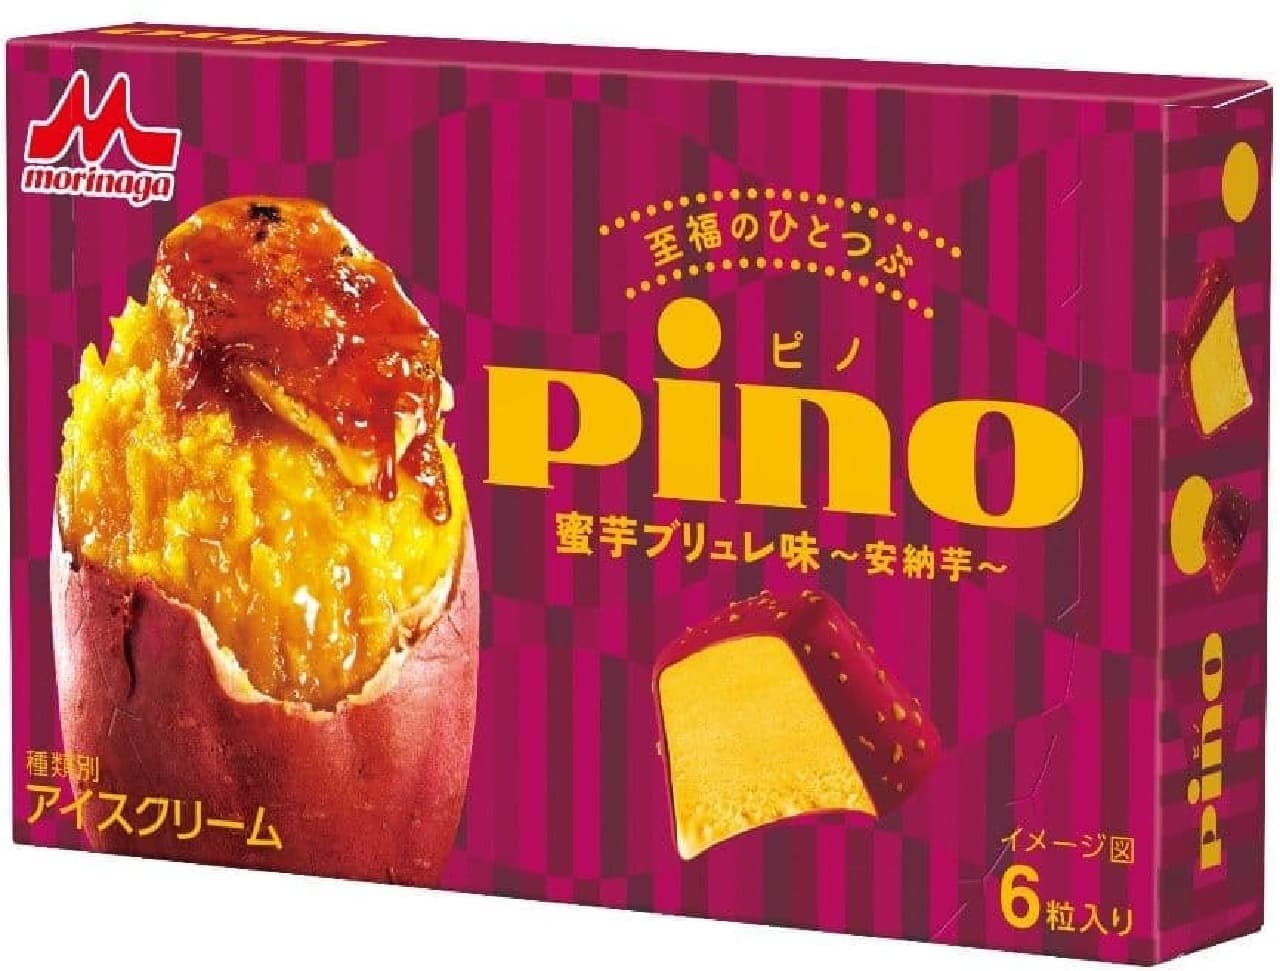 Morinaga Pinot - Honey Potato Brulee Flavor